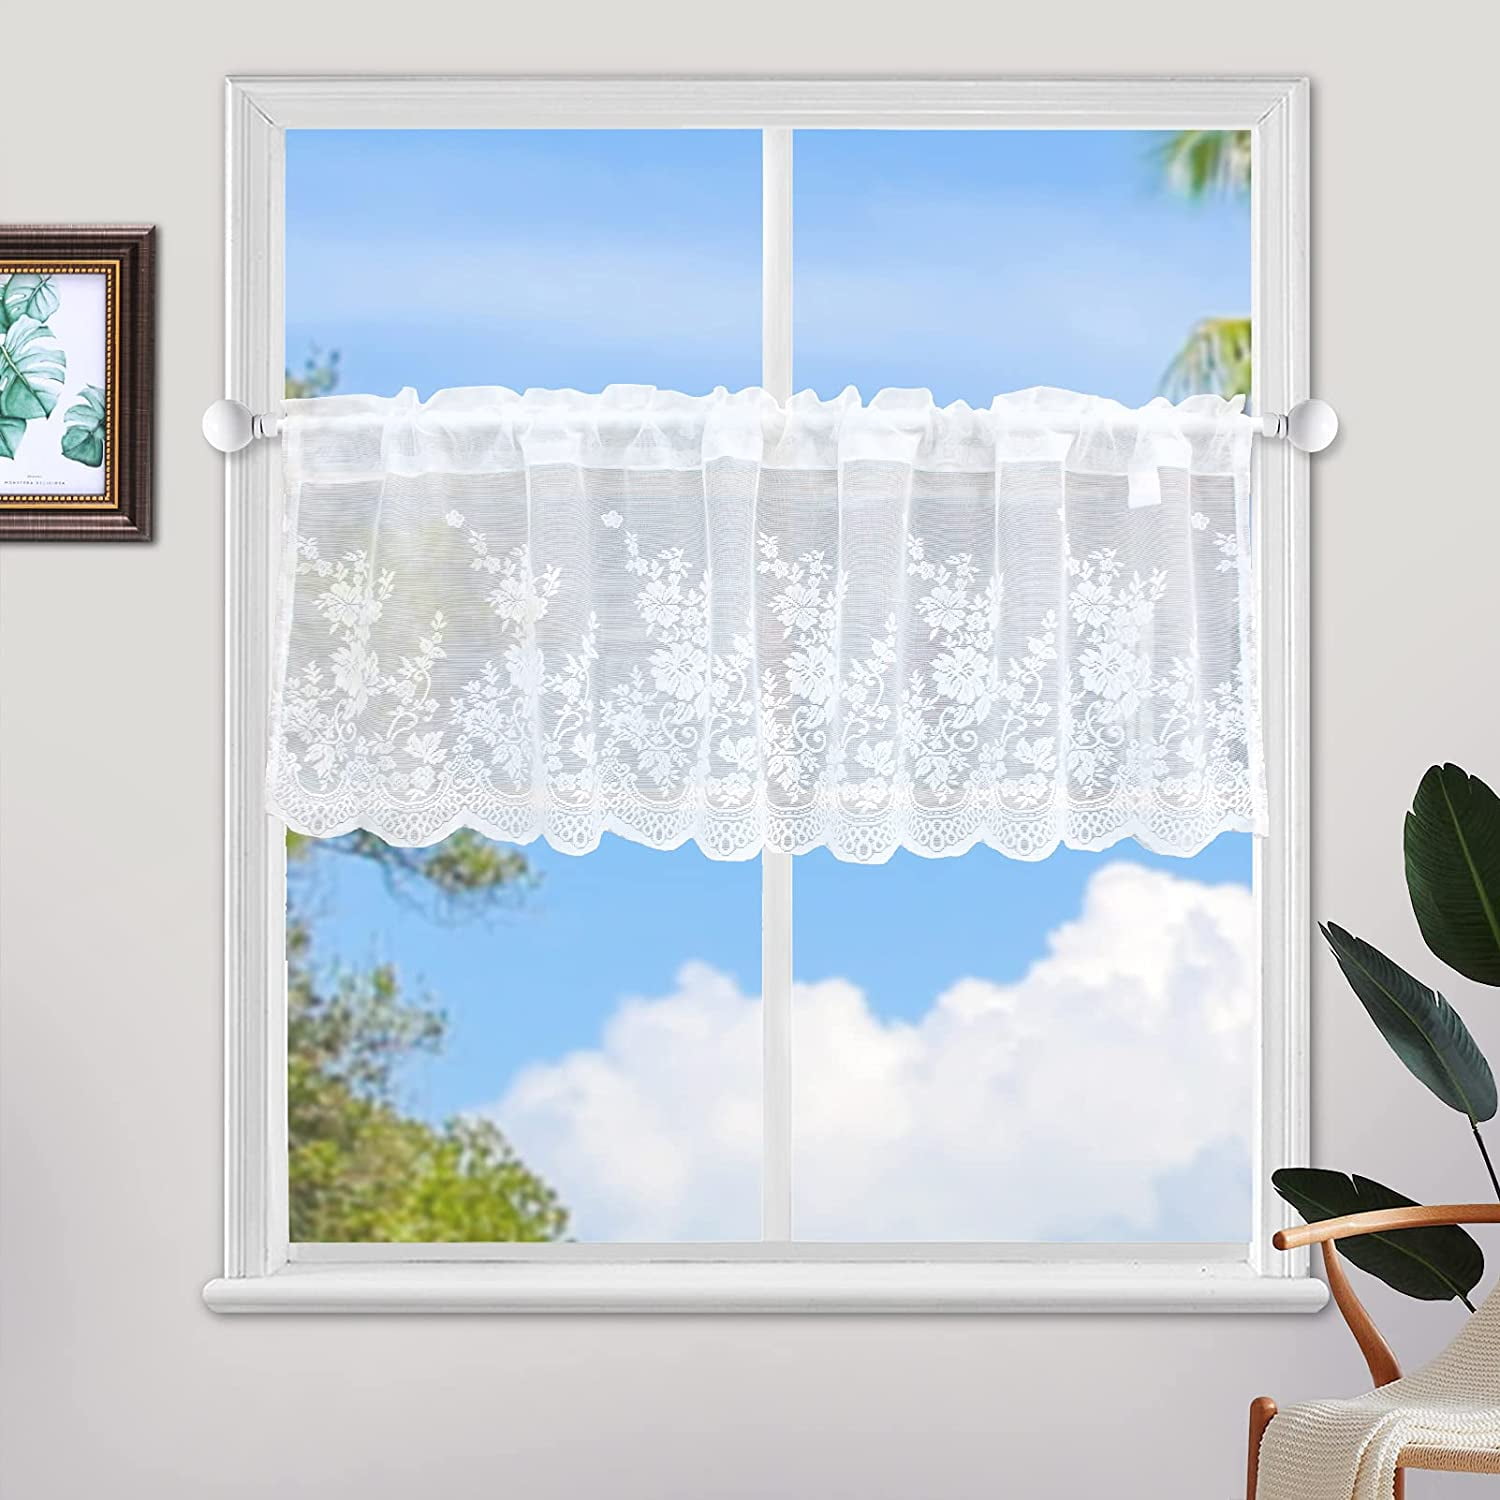 Lace Flower Window Balcony Short Curtain Valance Drape Home Decor Embroidered 